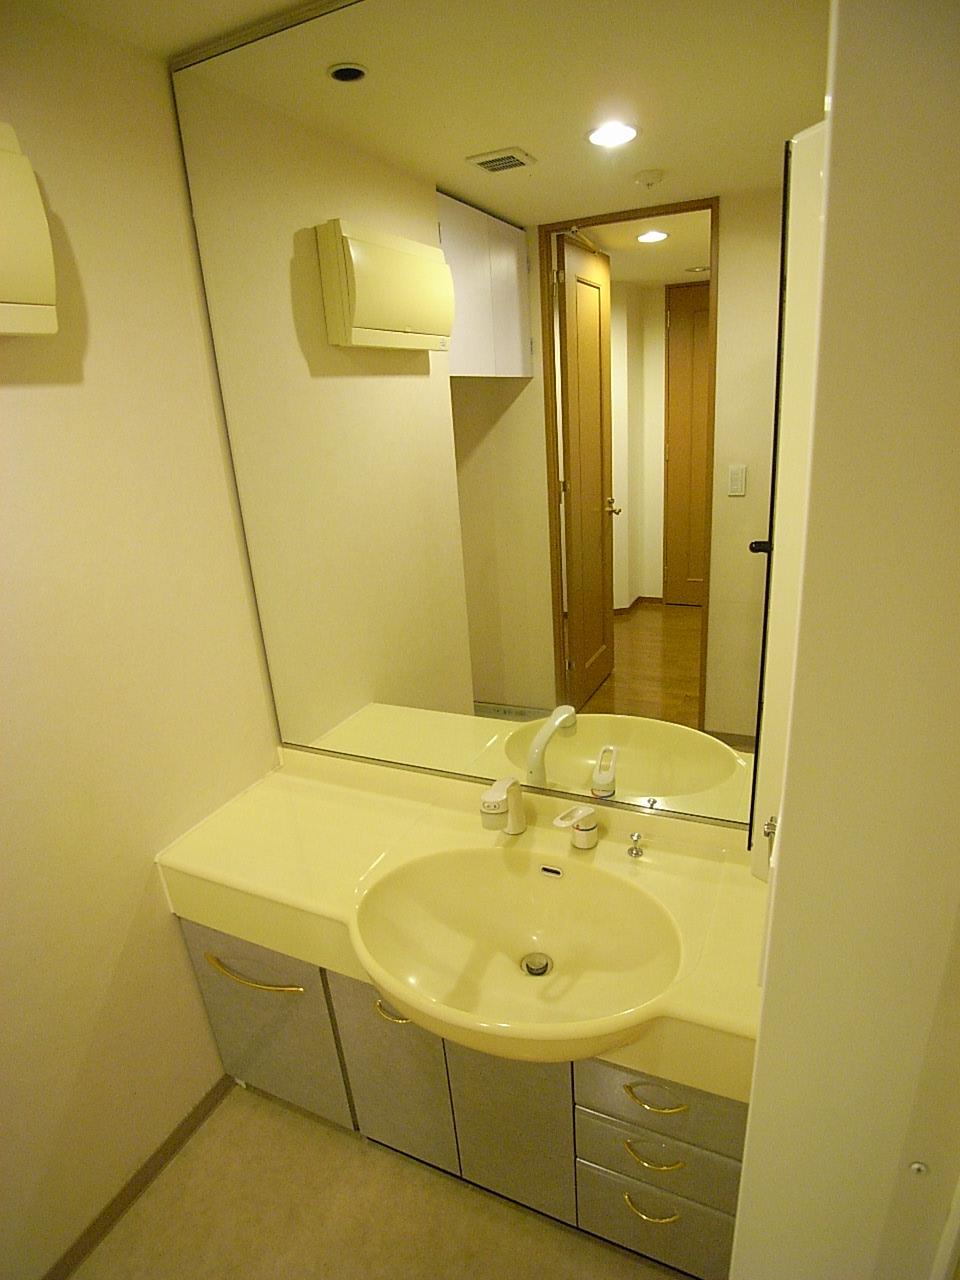 Wash basin, toilet. Mirror large independent wash basin